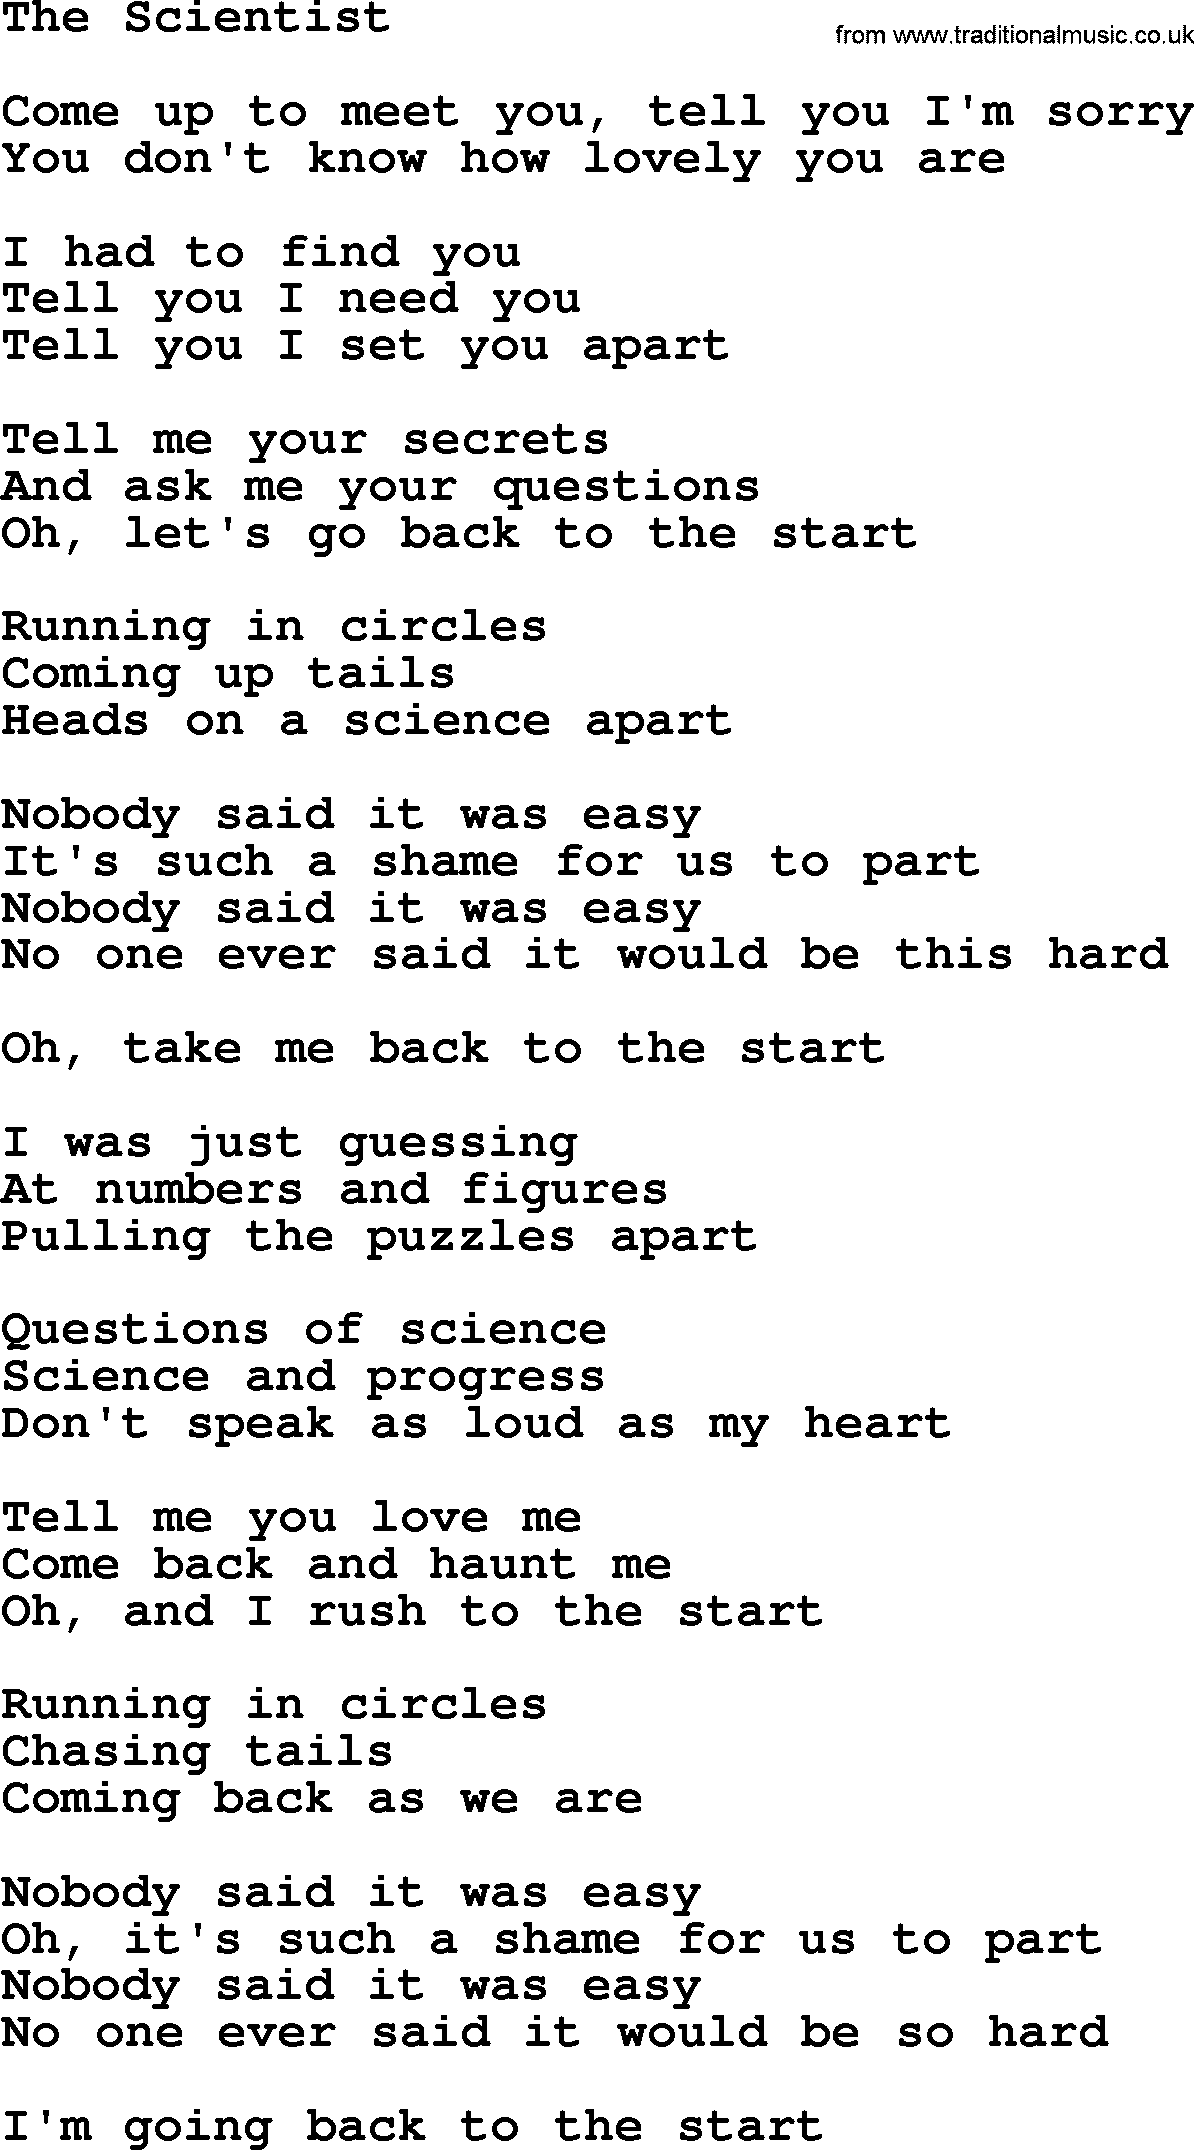 Willie Nelson song: The Scientist lyrics